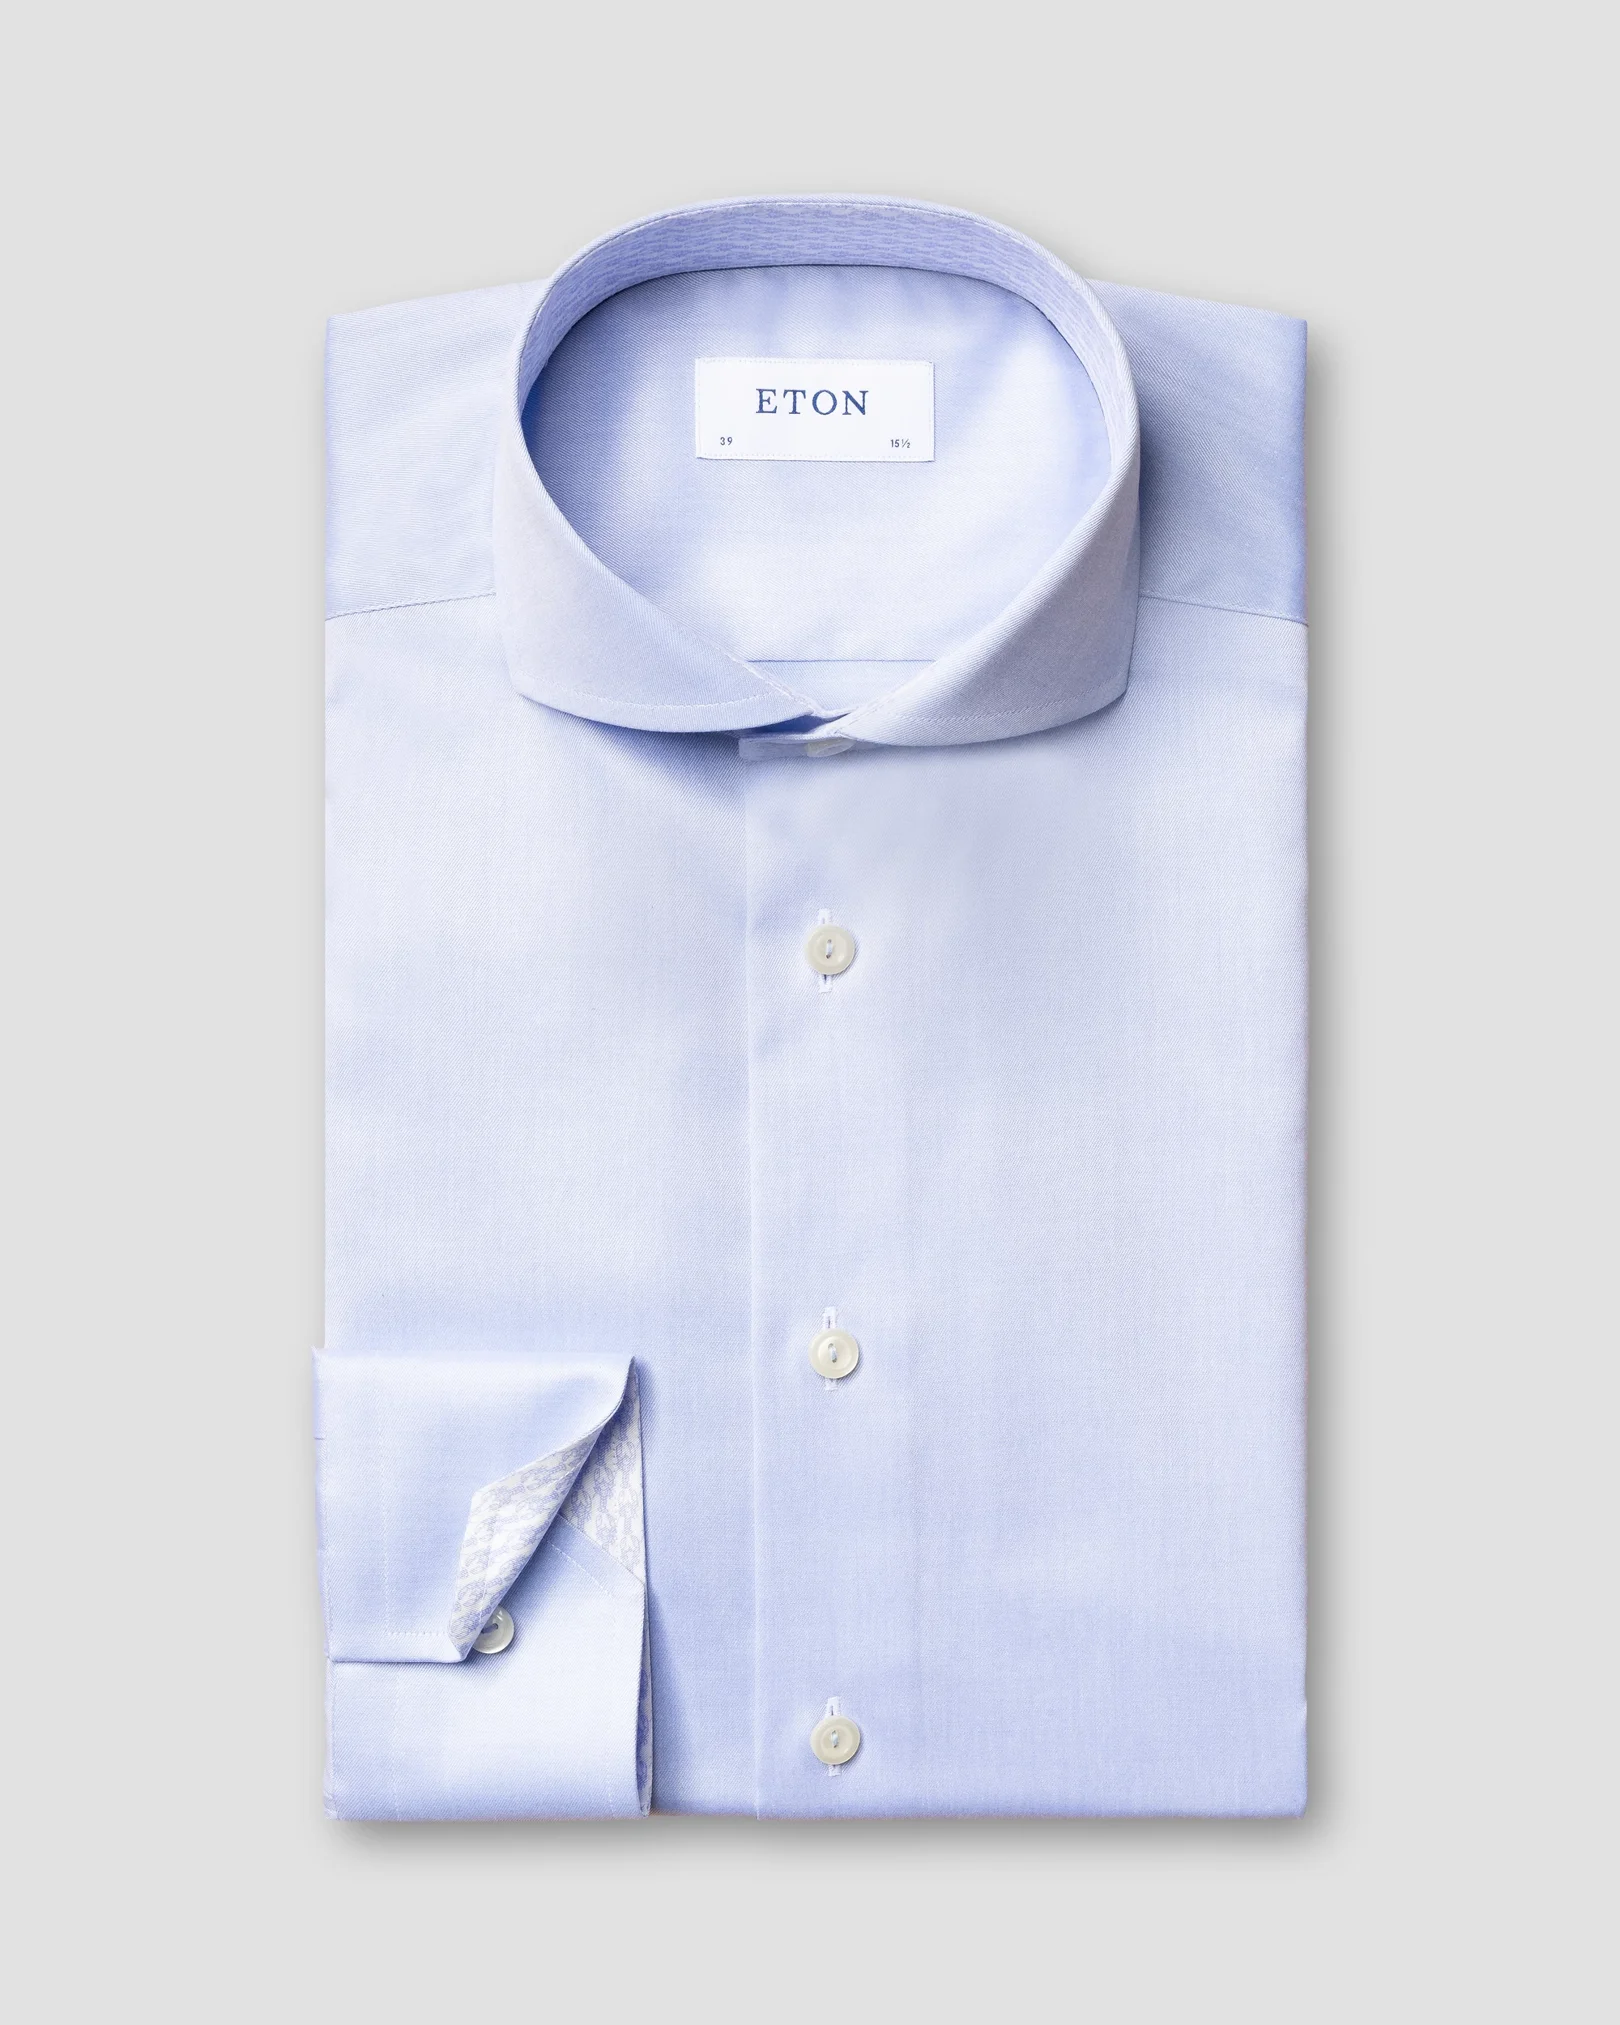 Eton - light blue signature twill shirt printed details extreme cut away